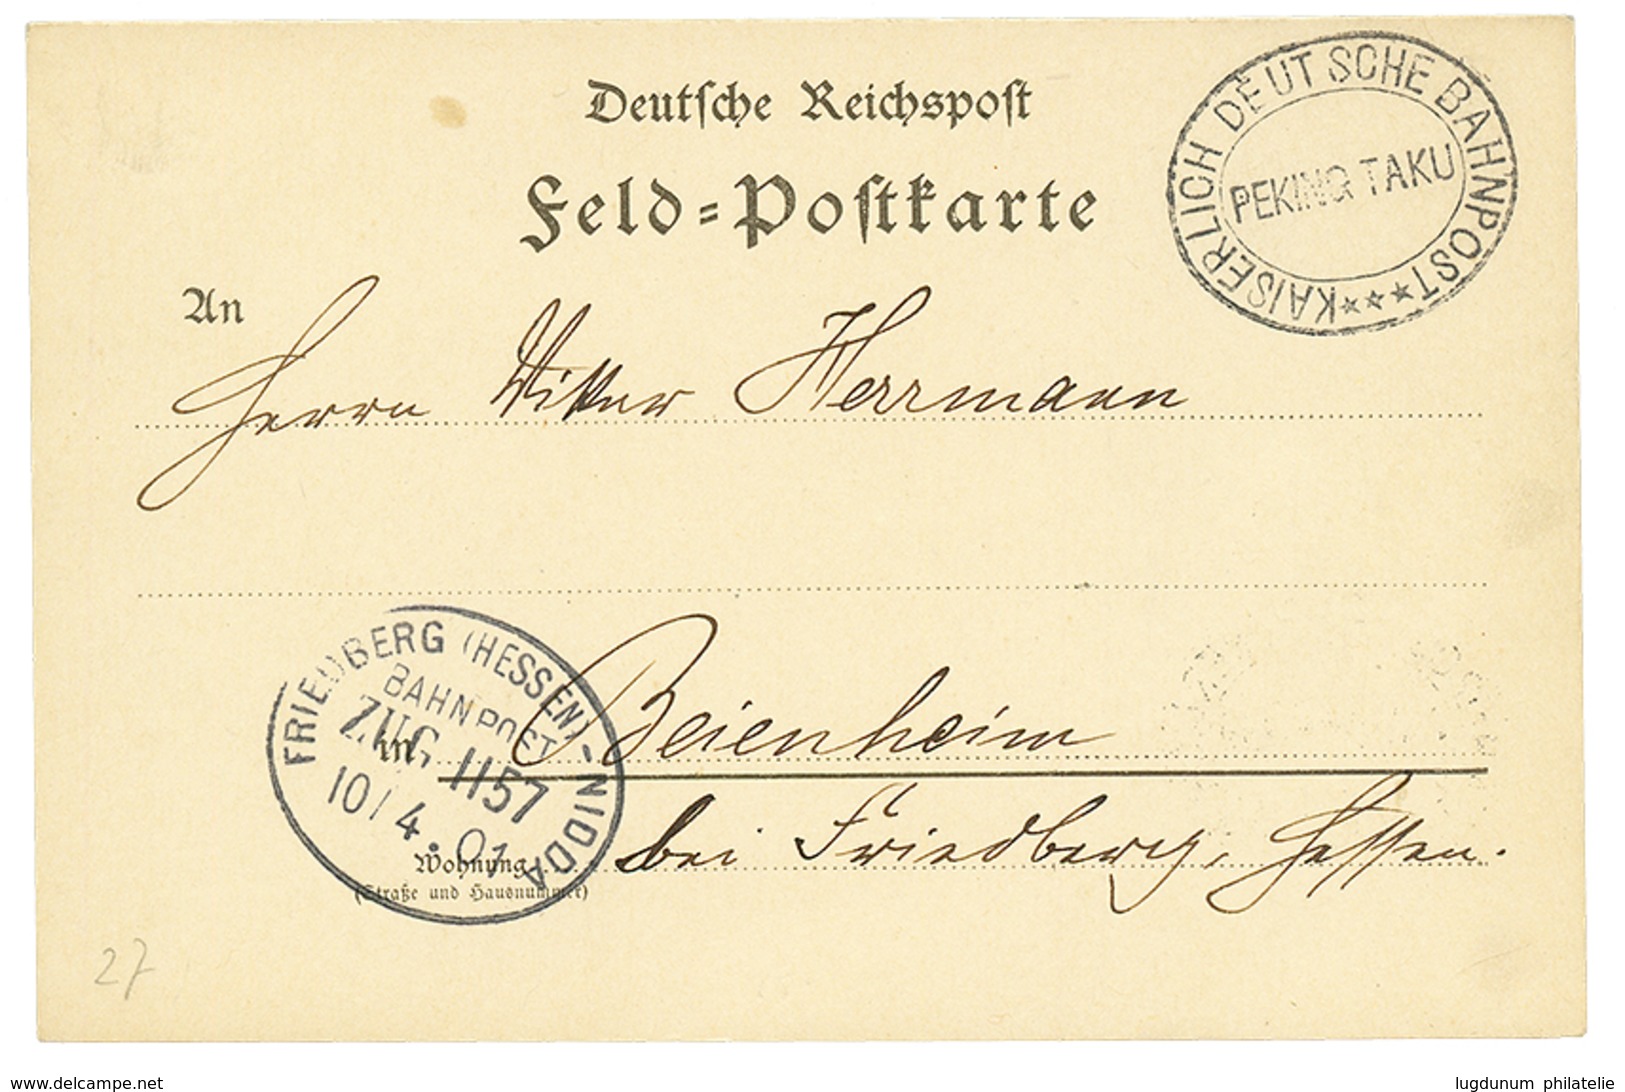 1901 KAISERLICH DEUTSCHE BAHNPOST PEKING-TAKU On Military Card. RARE. Superb. - Chine (bureaux)